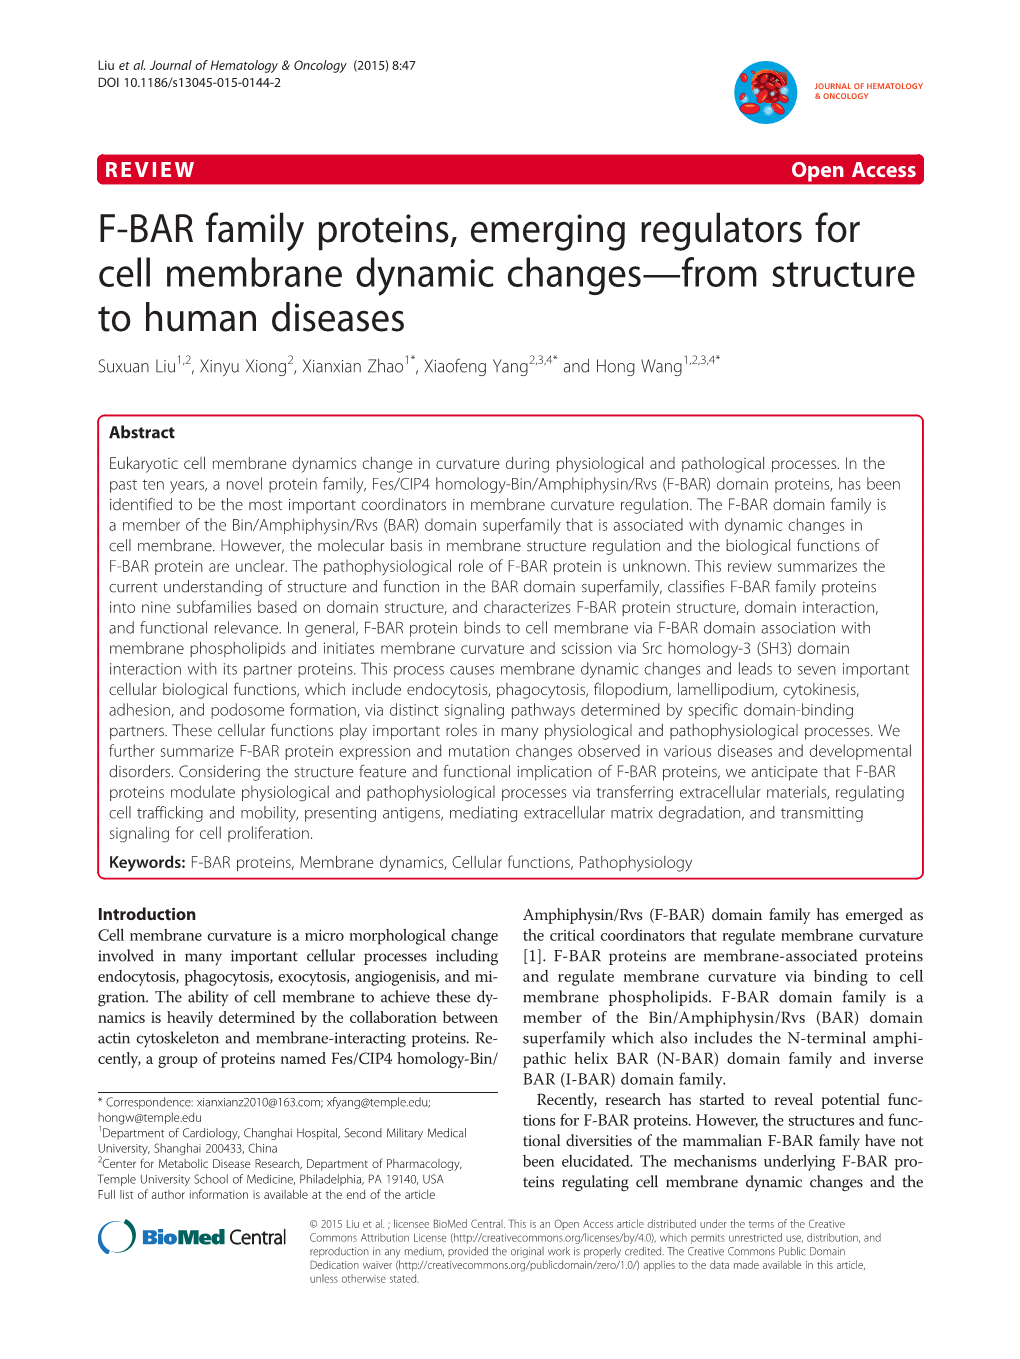 F-BAR Family Proteins, Emerging Regulators for Cell Membrane